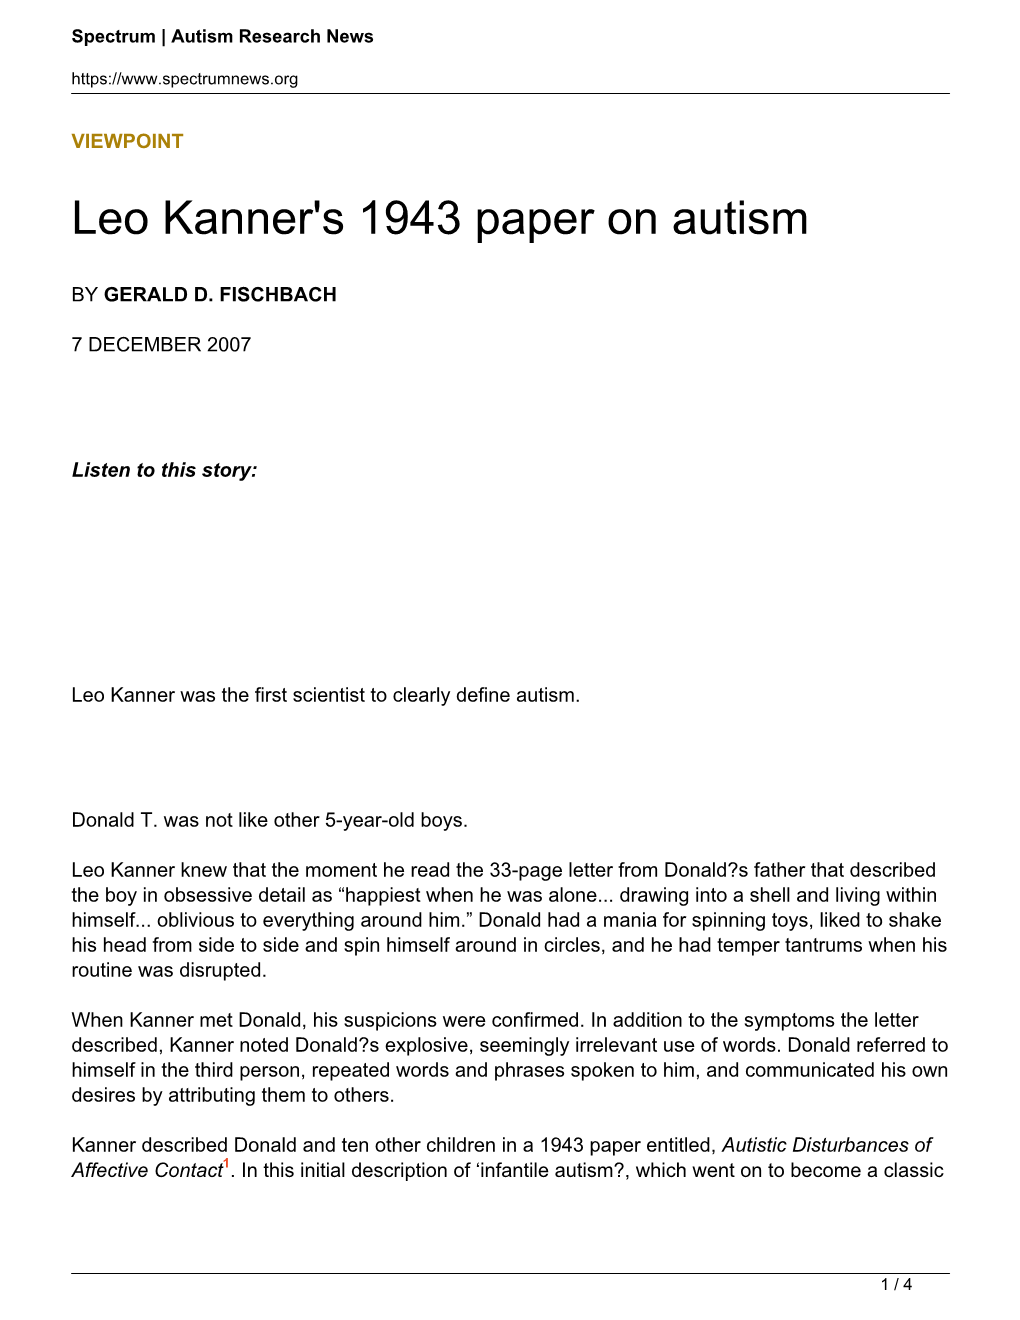 S 1943 Paper on Autism